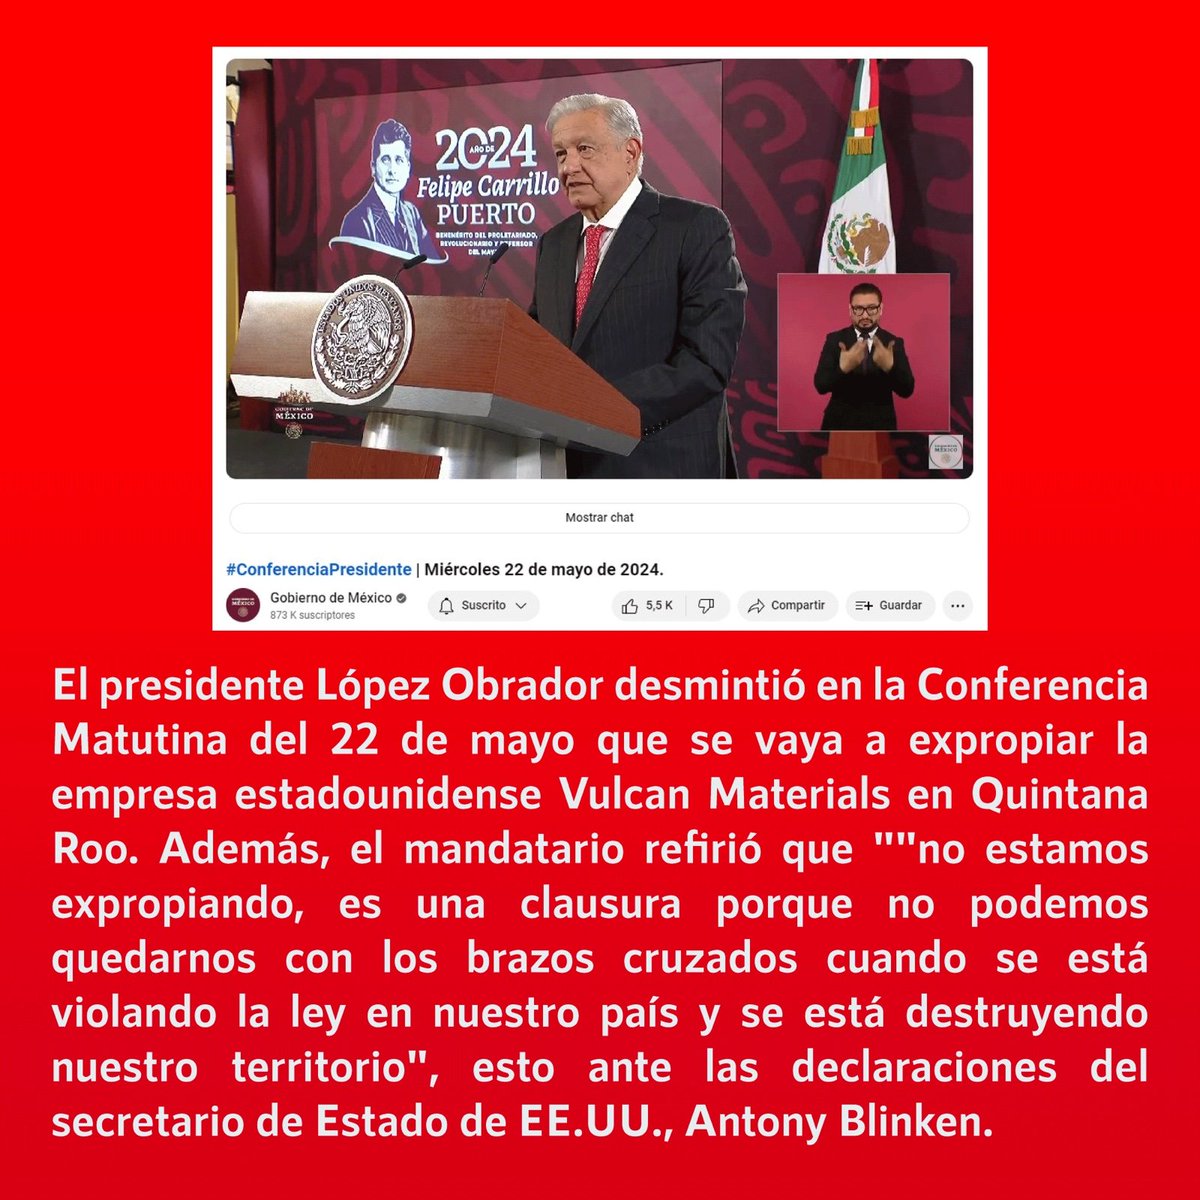 ❌Falso que se vaya a expropiar la firma estadounidense #VulcanMaterials en Quintana Roo ✅El presidente @lopezobrador_ informó el 22 de mayo que no se va a expropiar la empresa Vulcan Materials en #QuintanaRoo y detalló que continuará clausurada ➡️infodemia.mx/entrada/5585